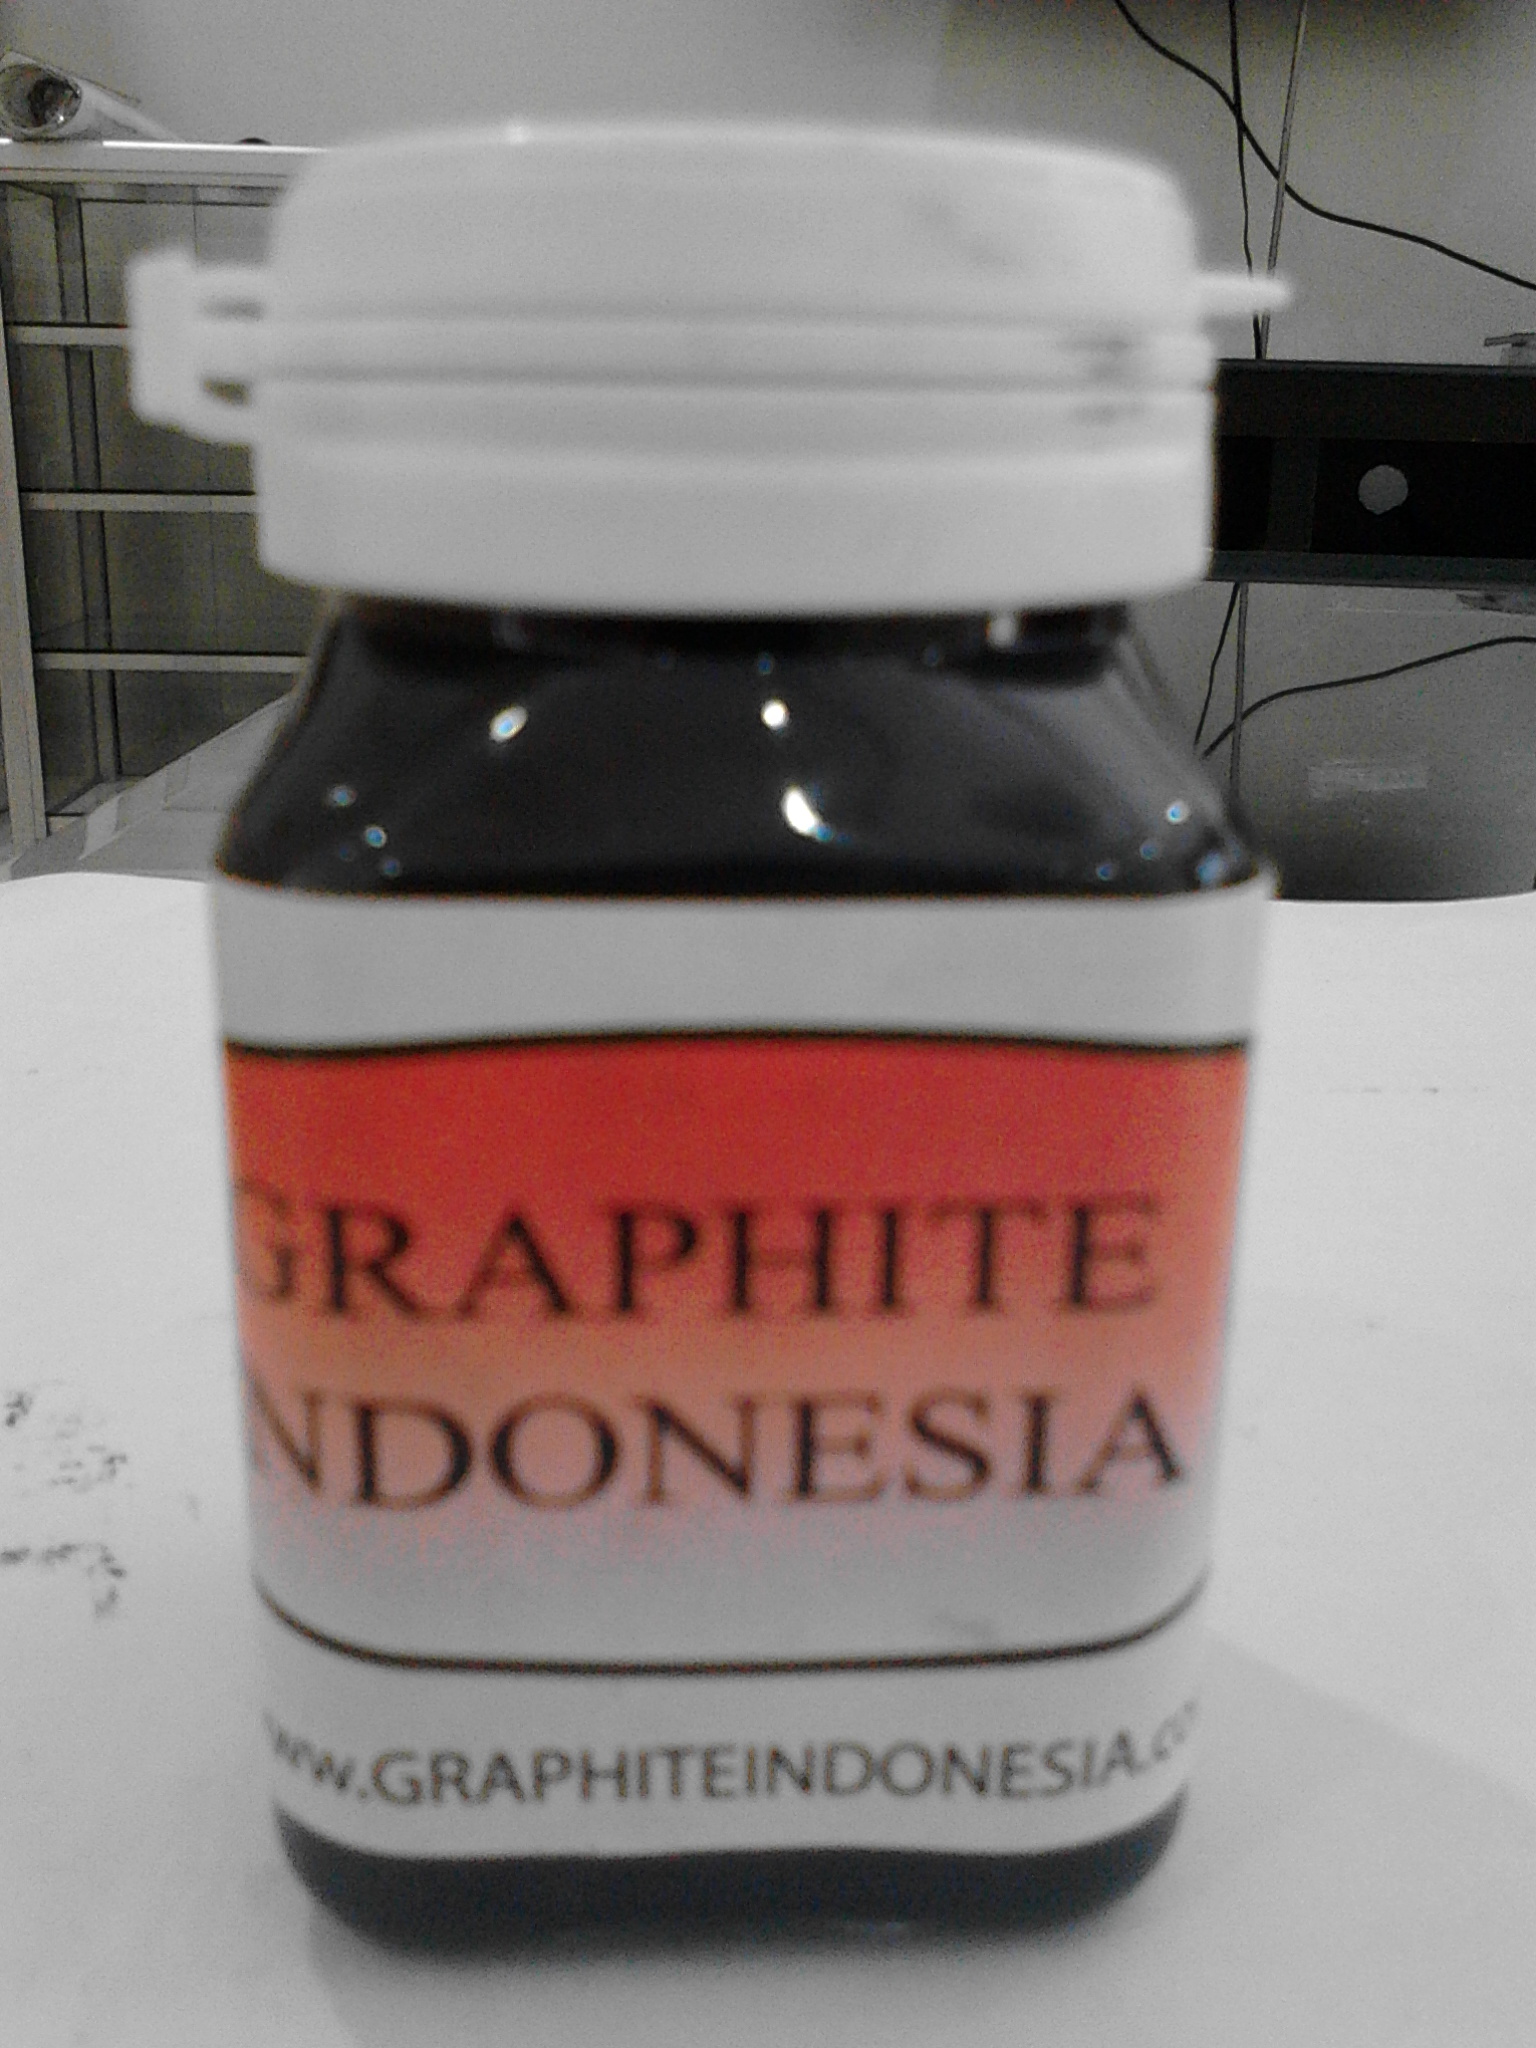 graphiteindonesia.com